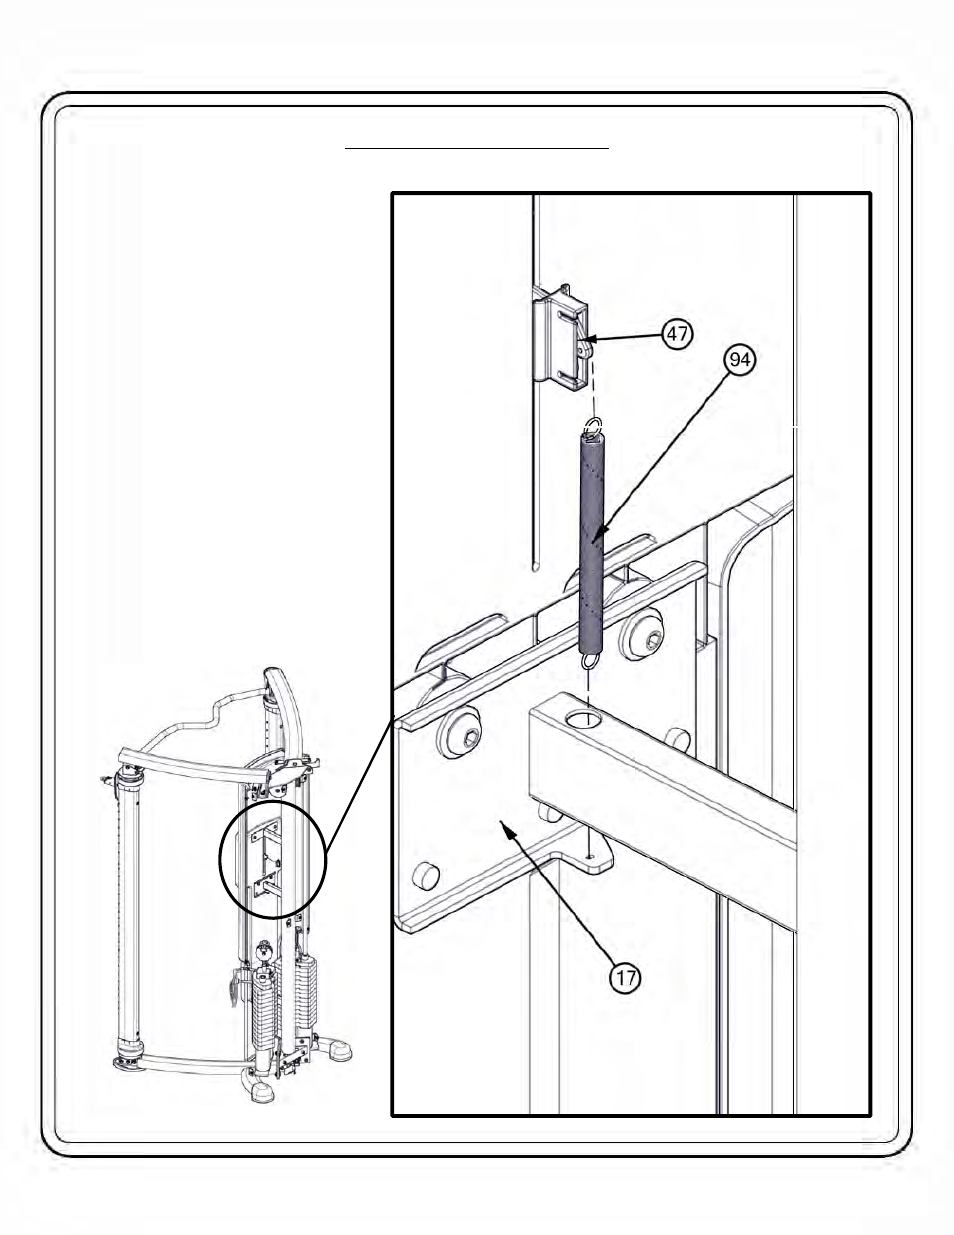 Owner’s manual frame assembly | Hoist Fitness Mi6 User Manual | Page 38